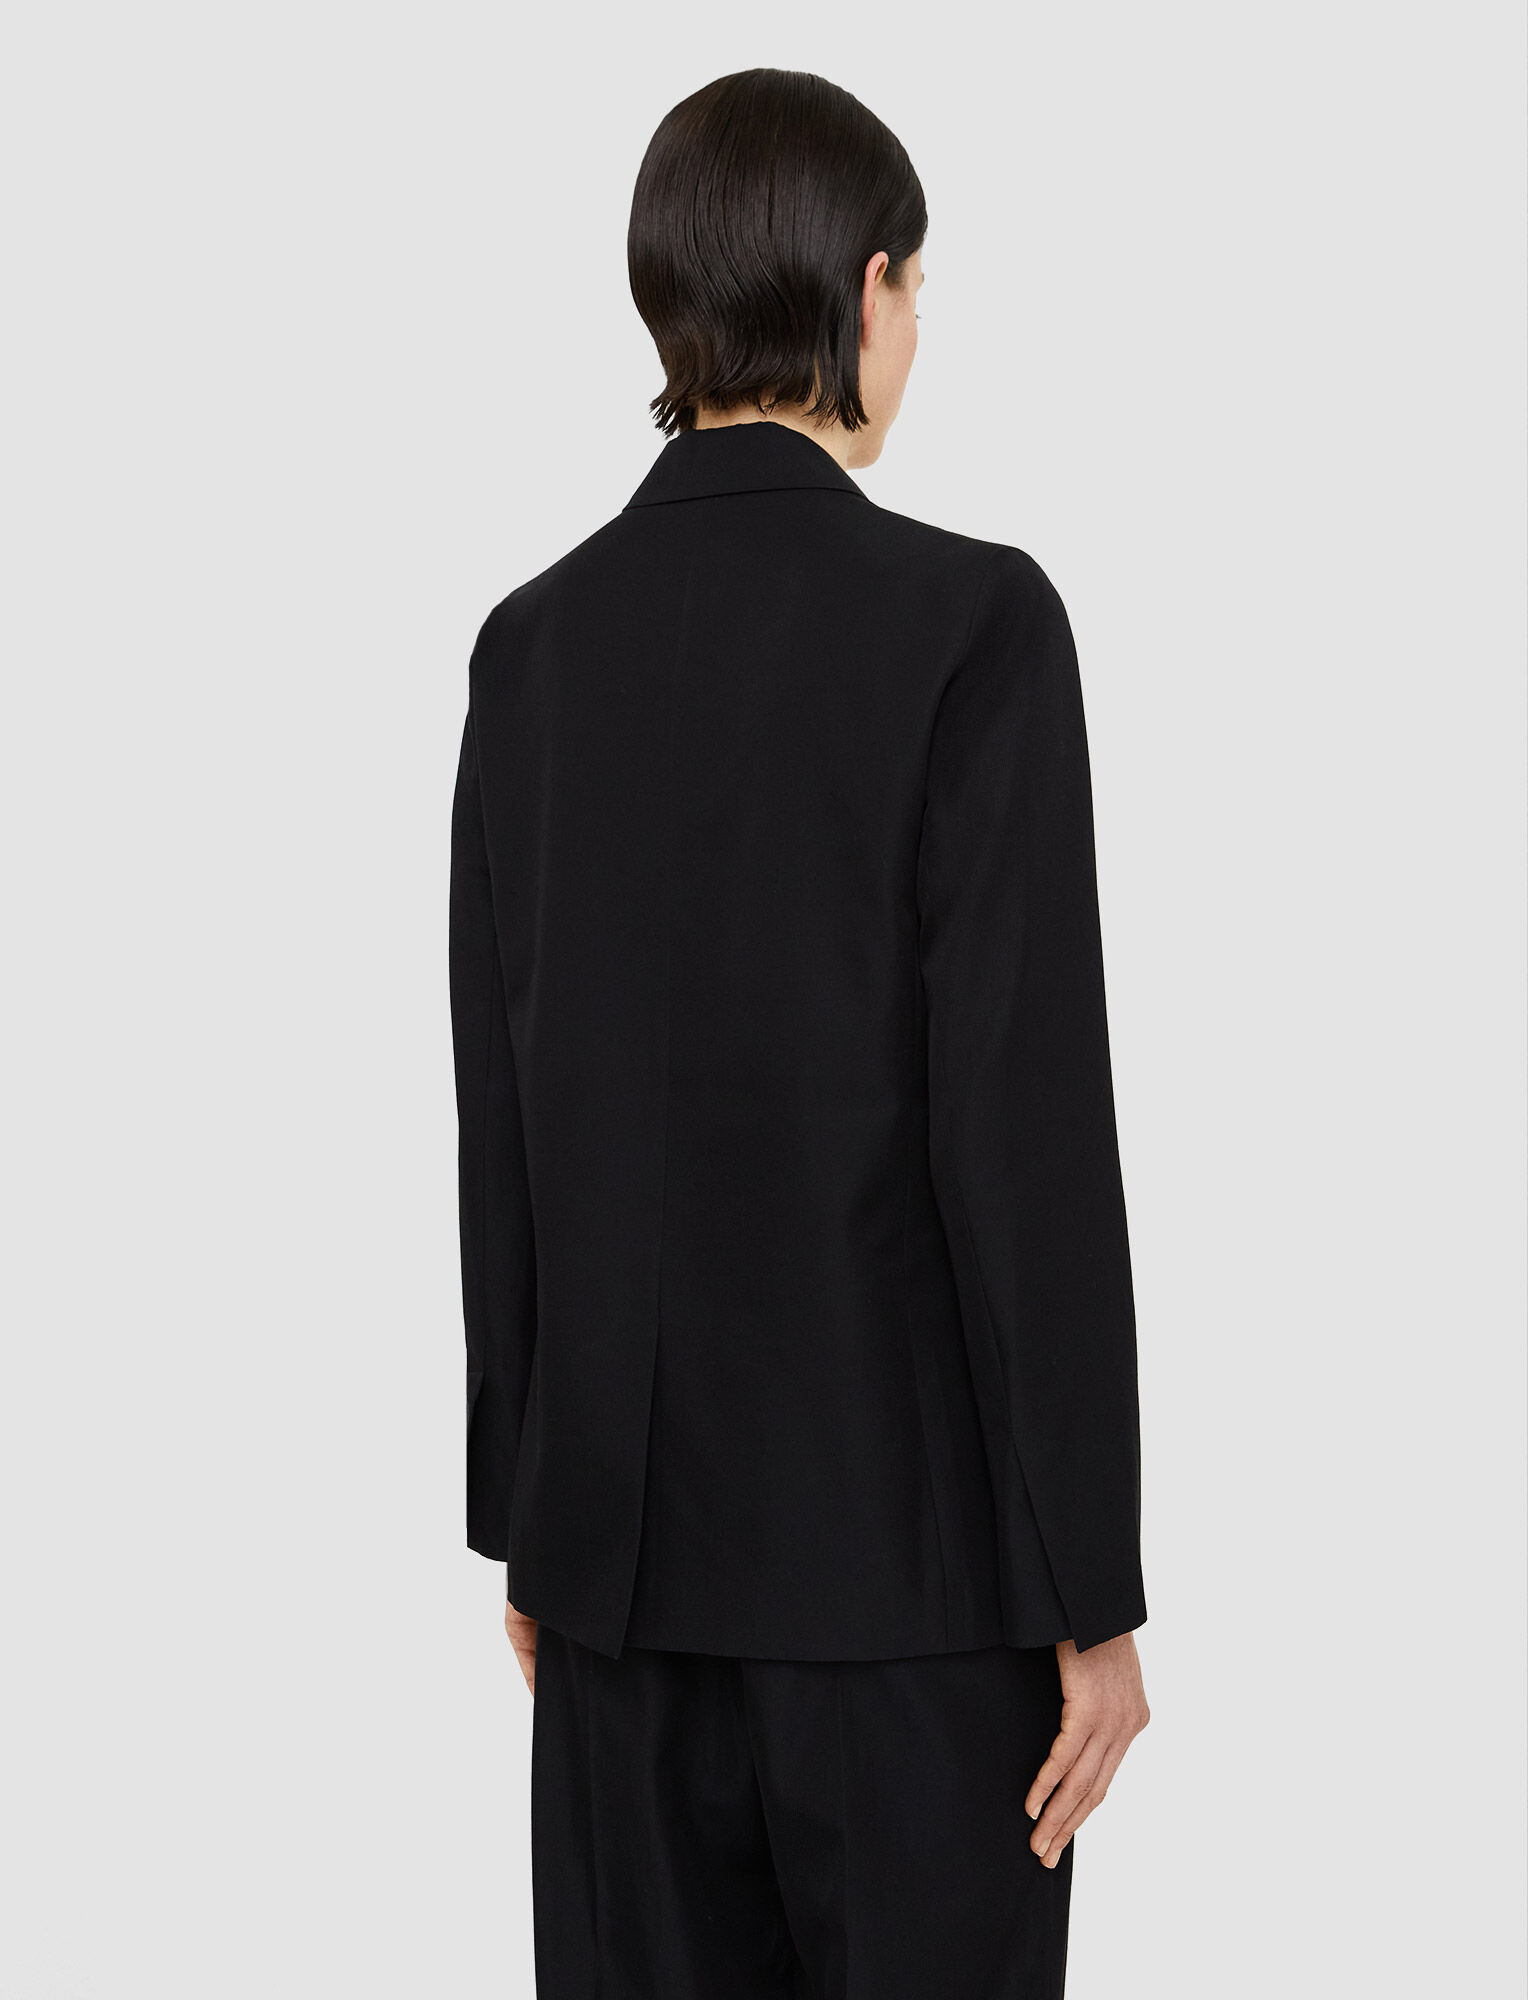 Joseph, Soft Cotton Silk Jacoba Jacket, in Black